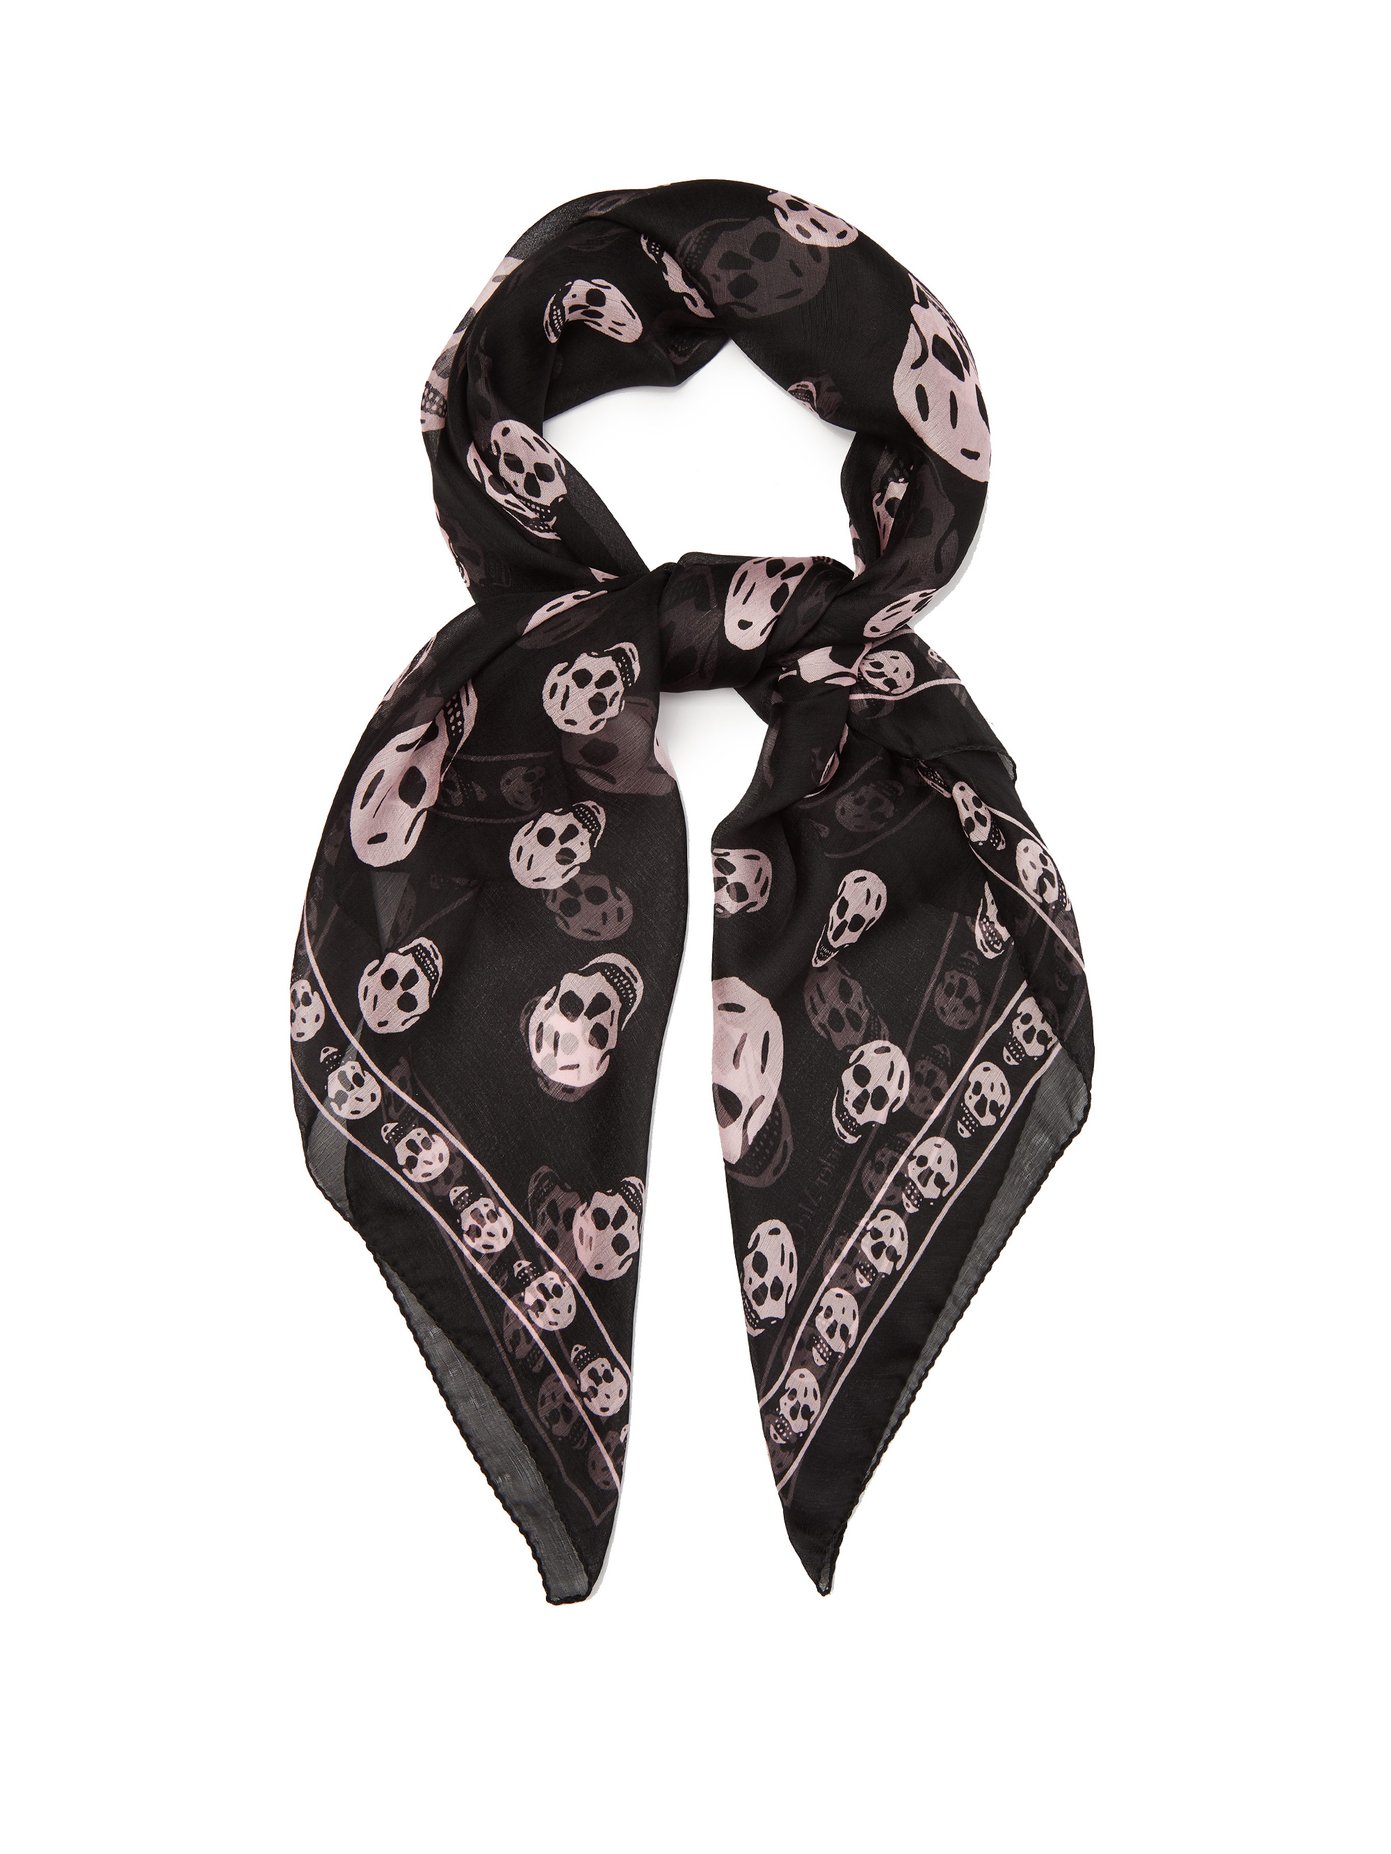 alexander mcqueen silk chiffon skull scarf